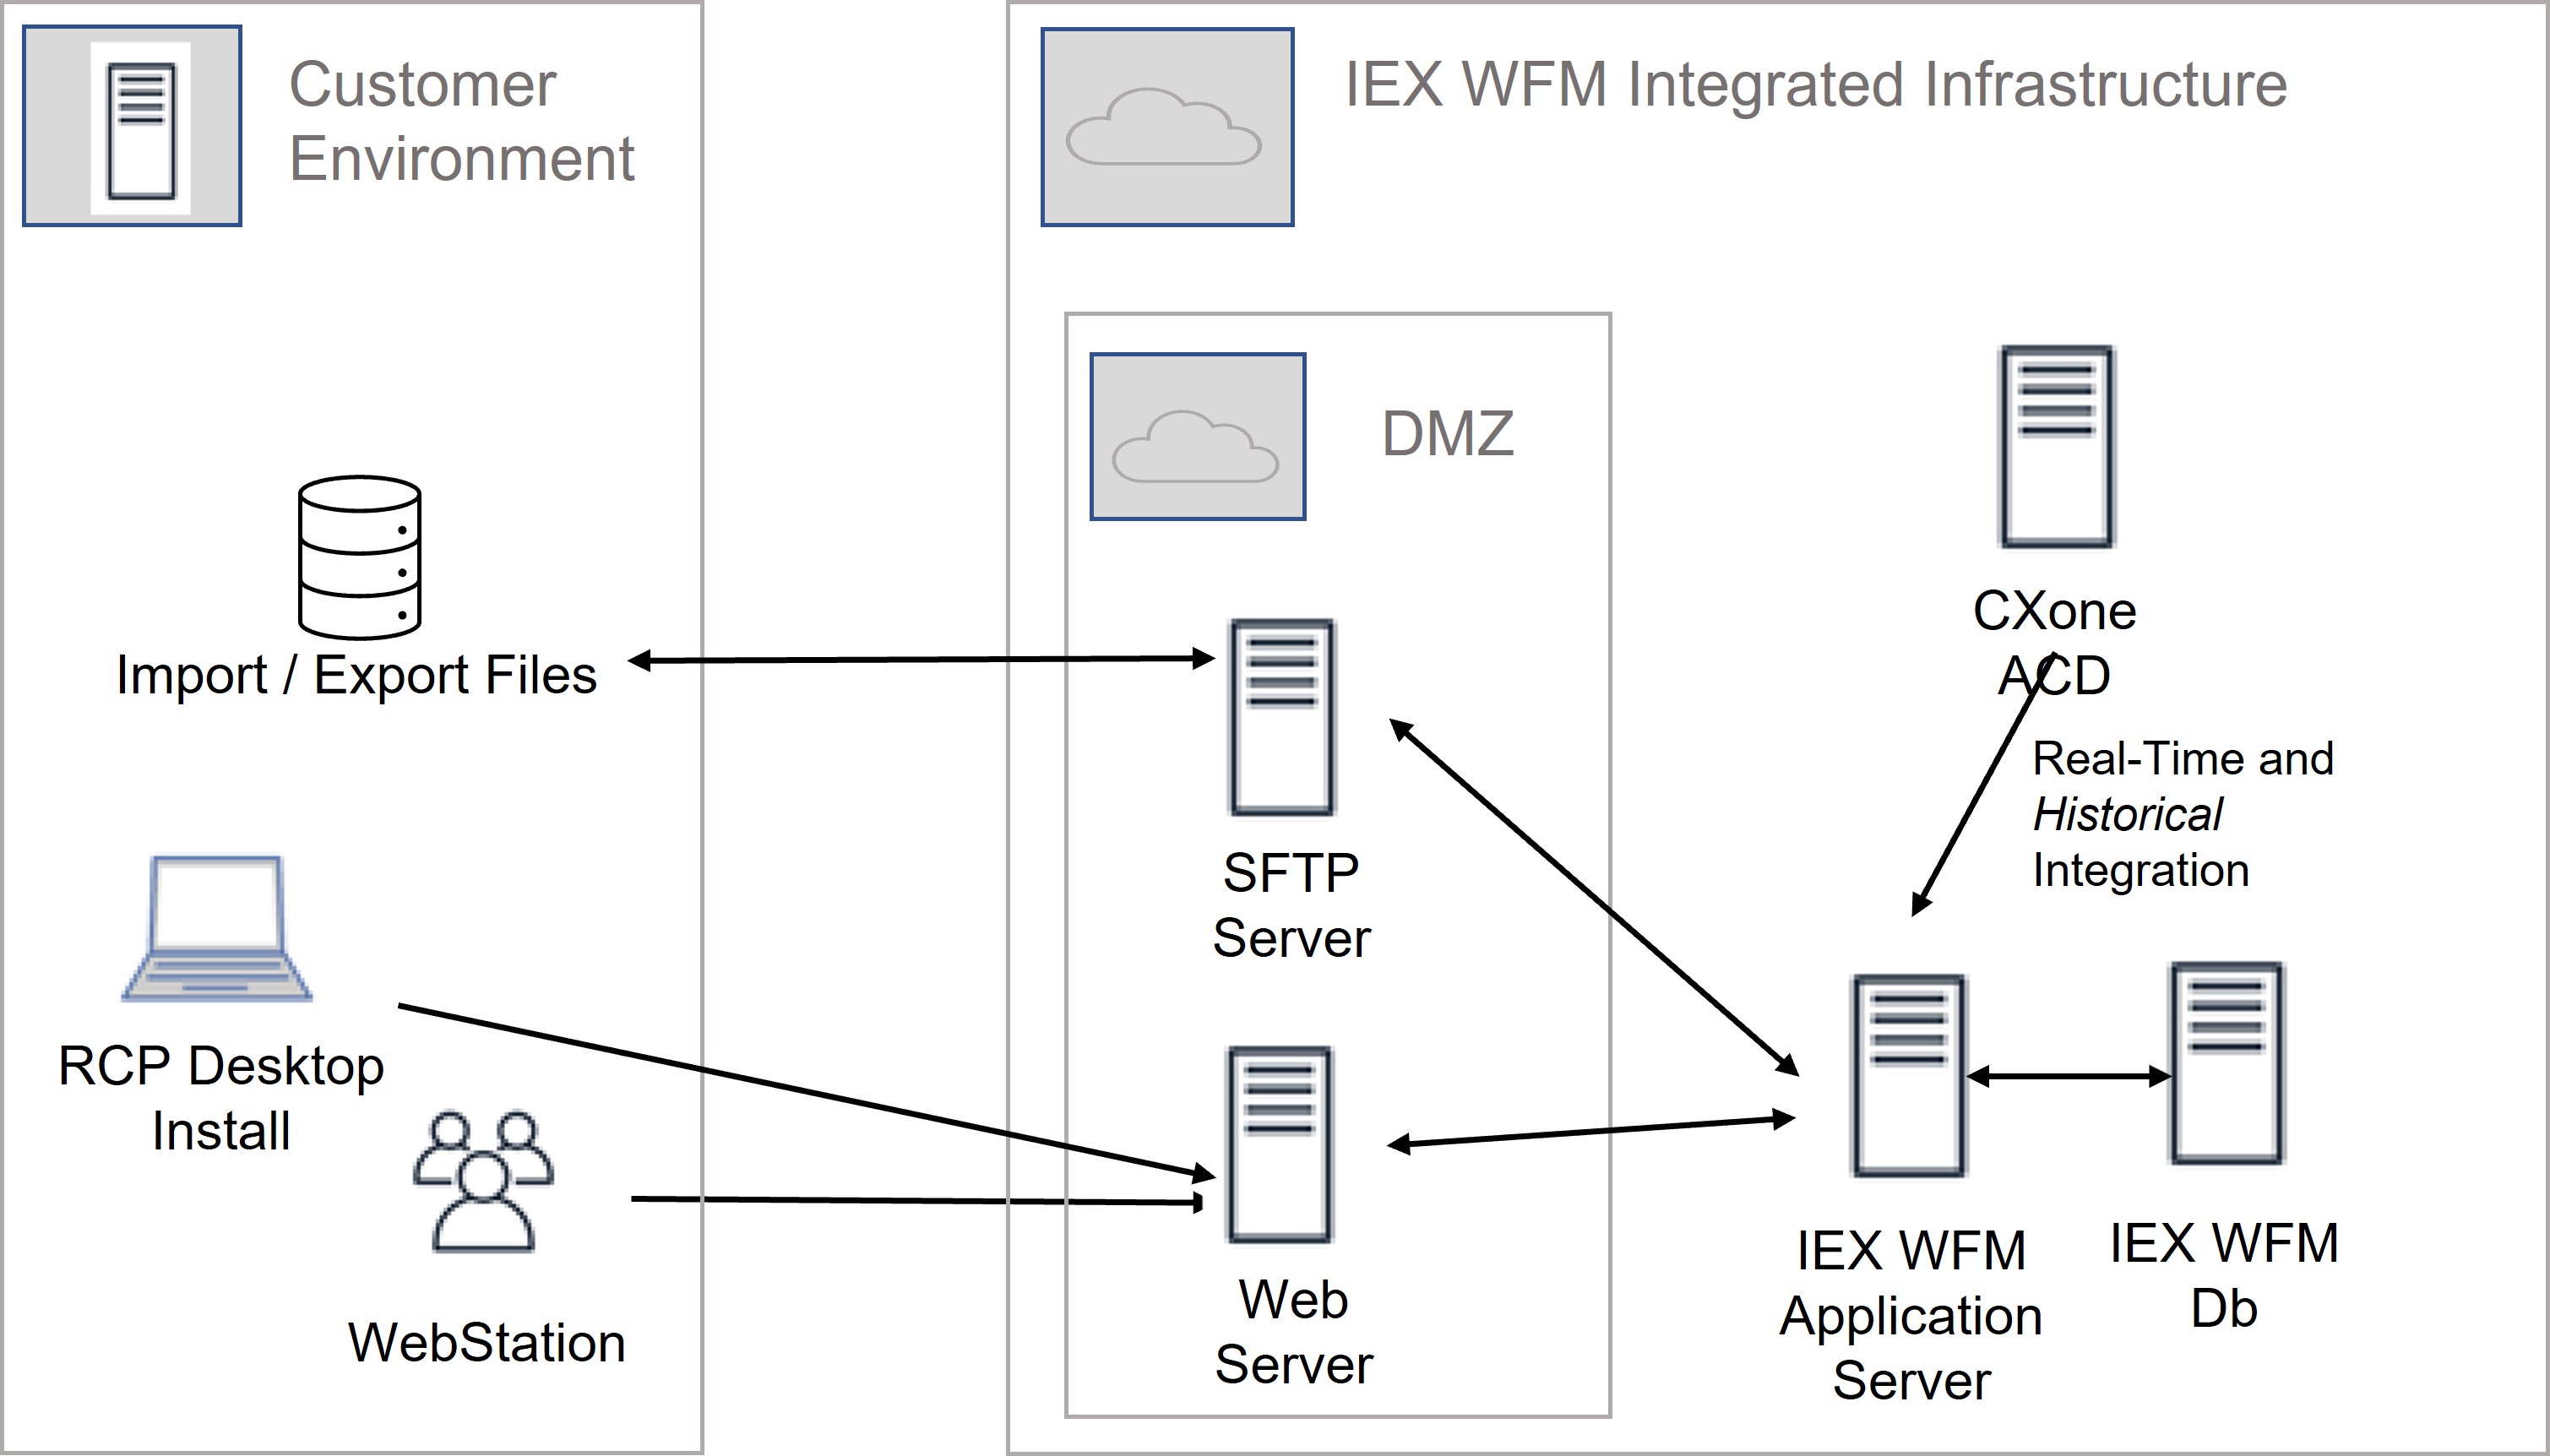 Schema van IEX WFM Integrated Network.